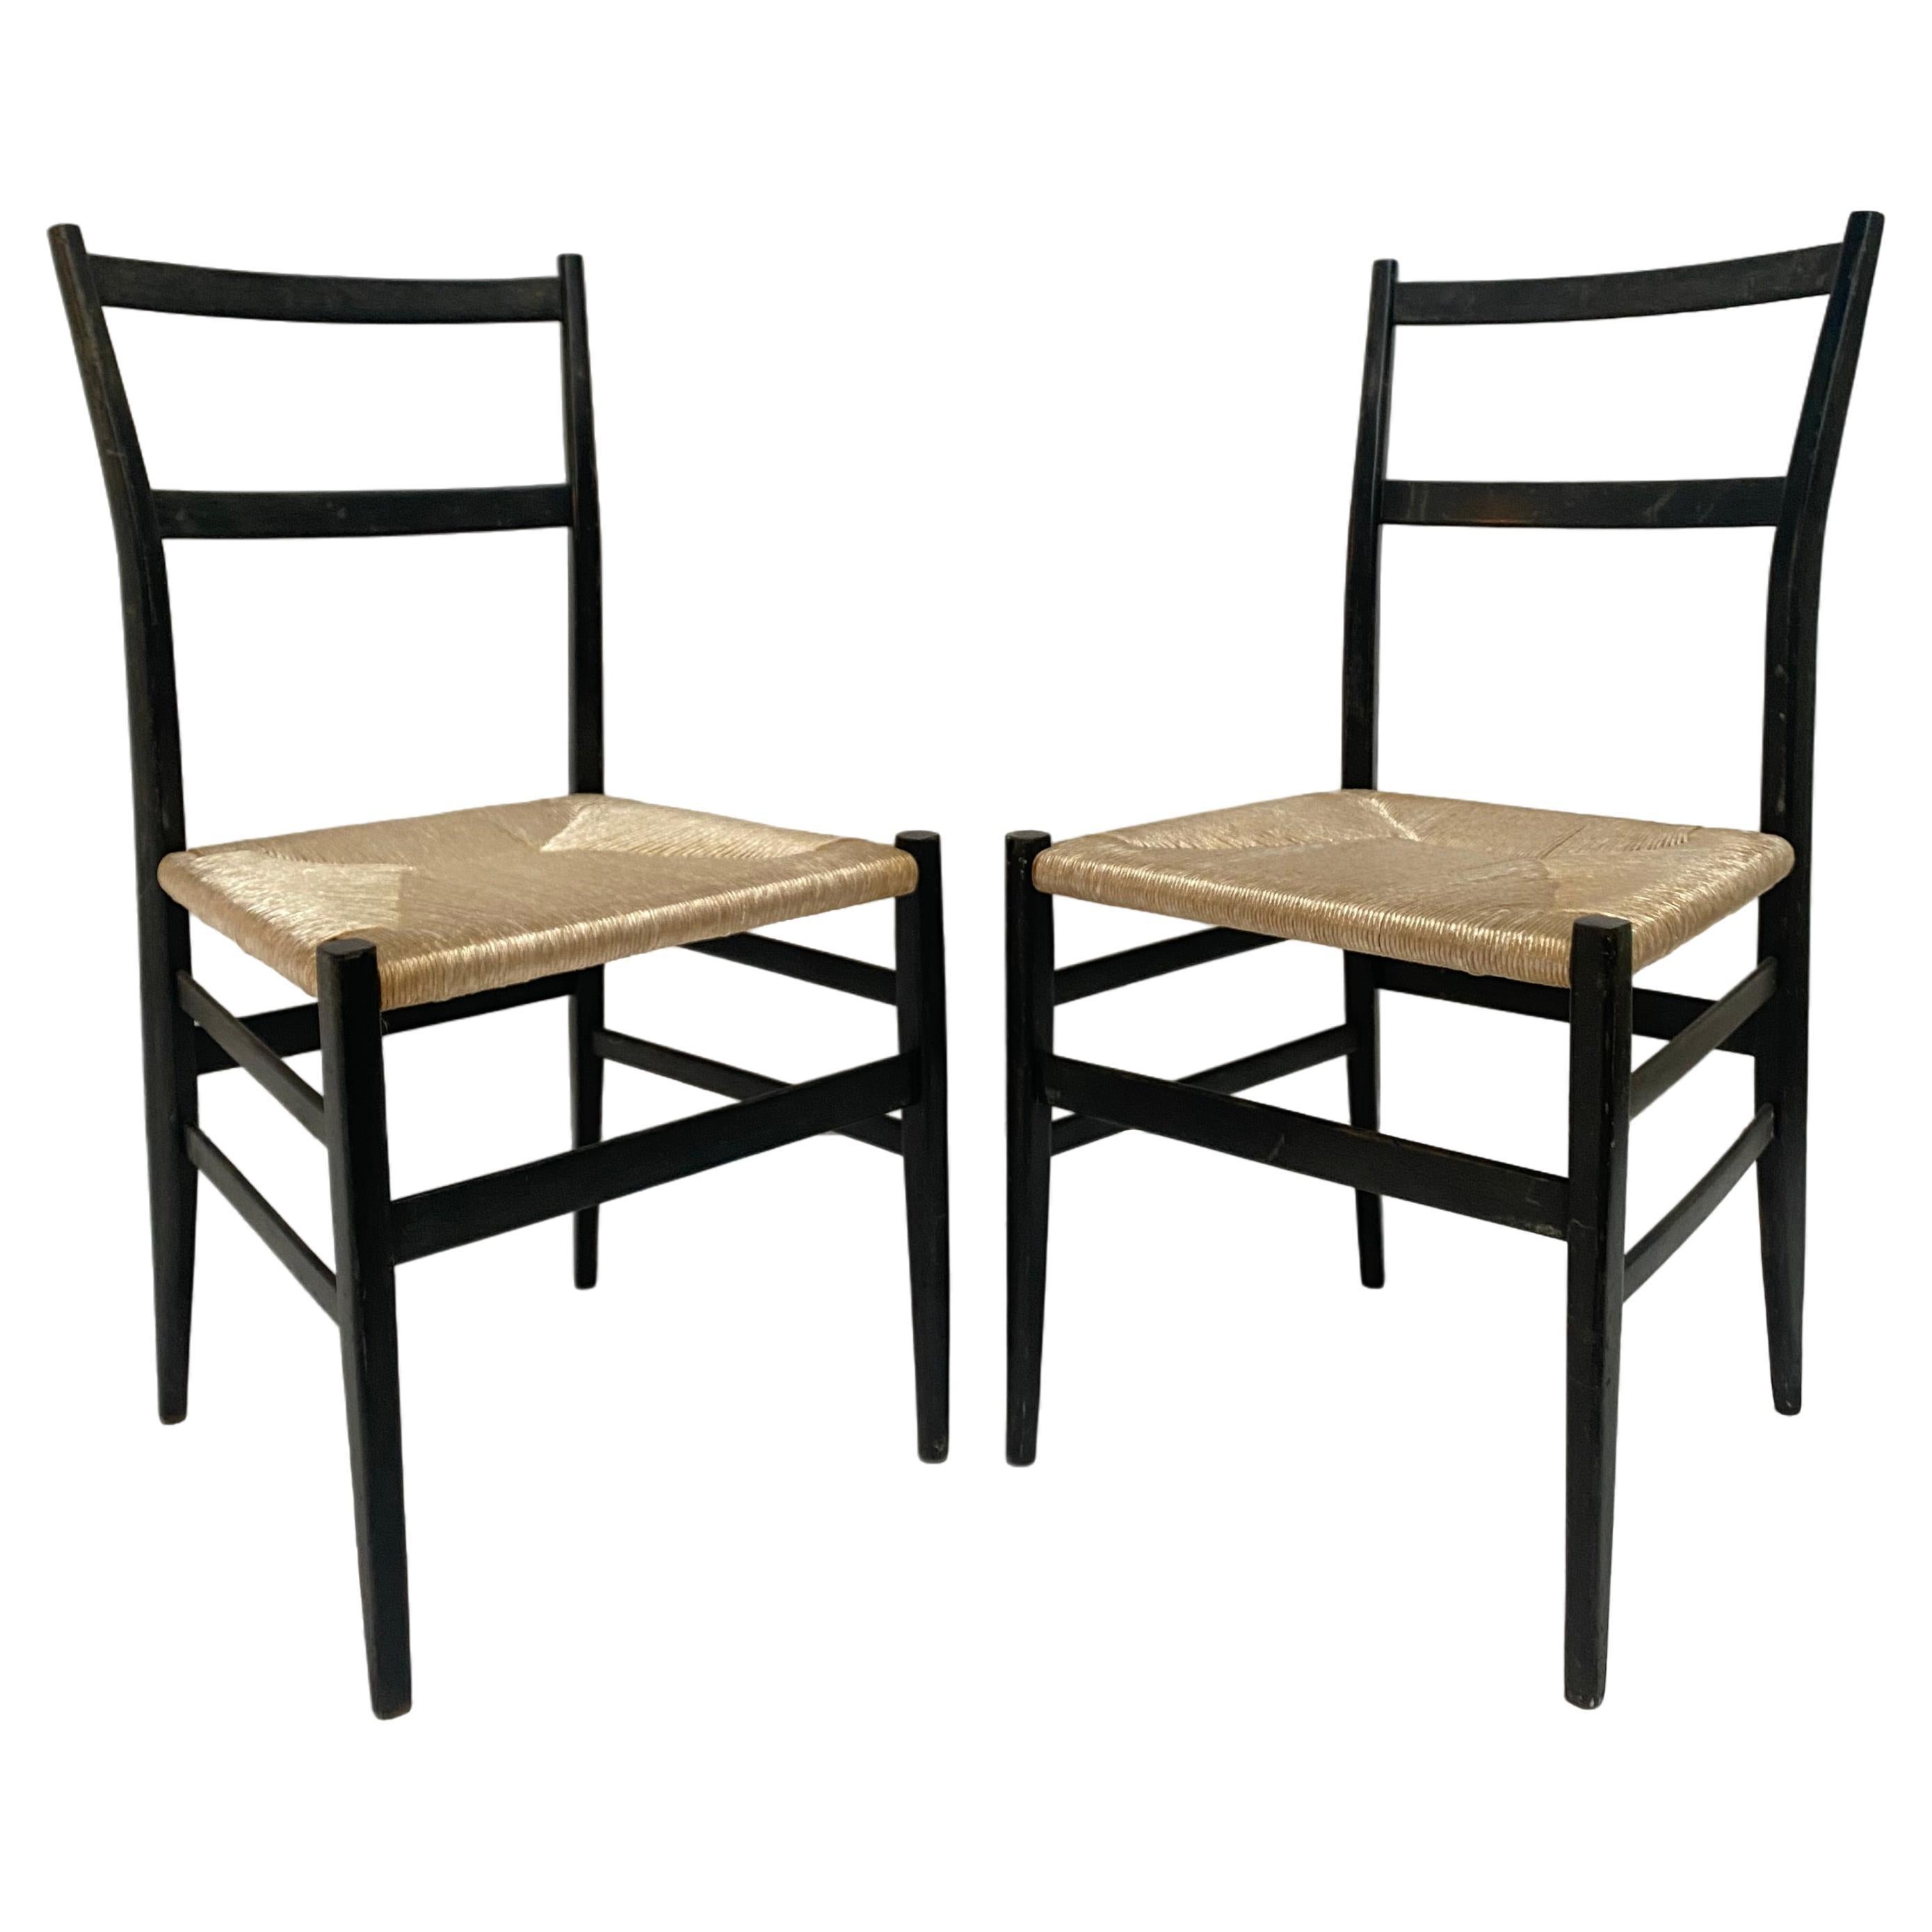 Pair of Leggera Black Ebonized Wooden Dining Chairs by Gio Ponti, Italy, 1950s